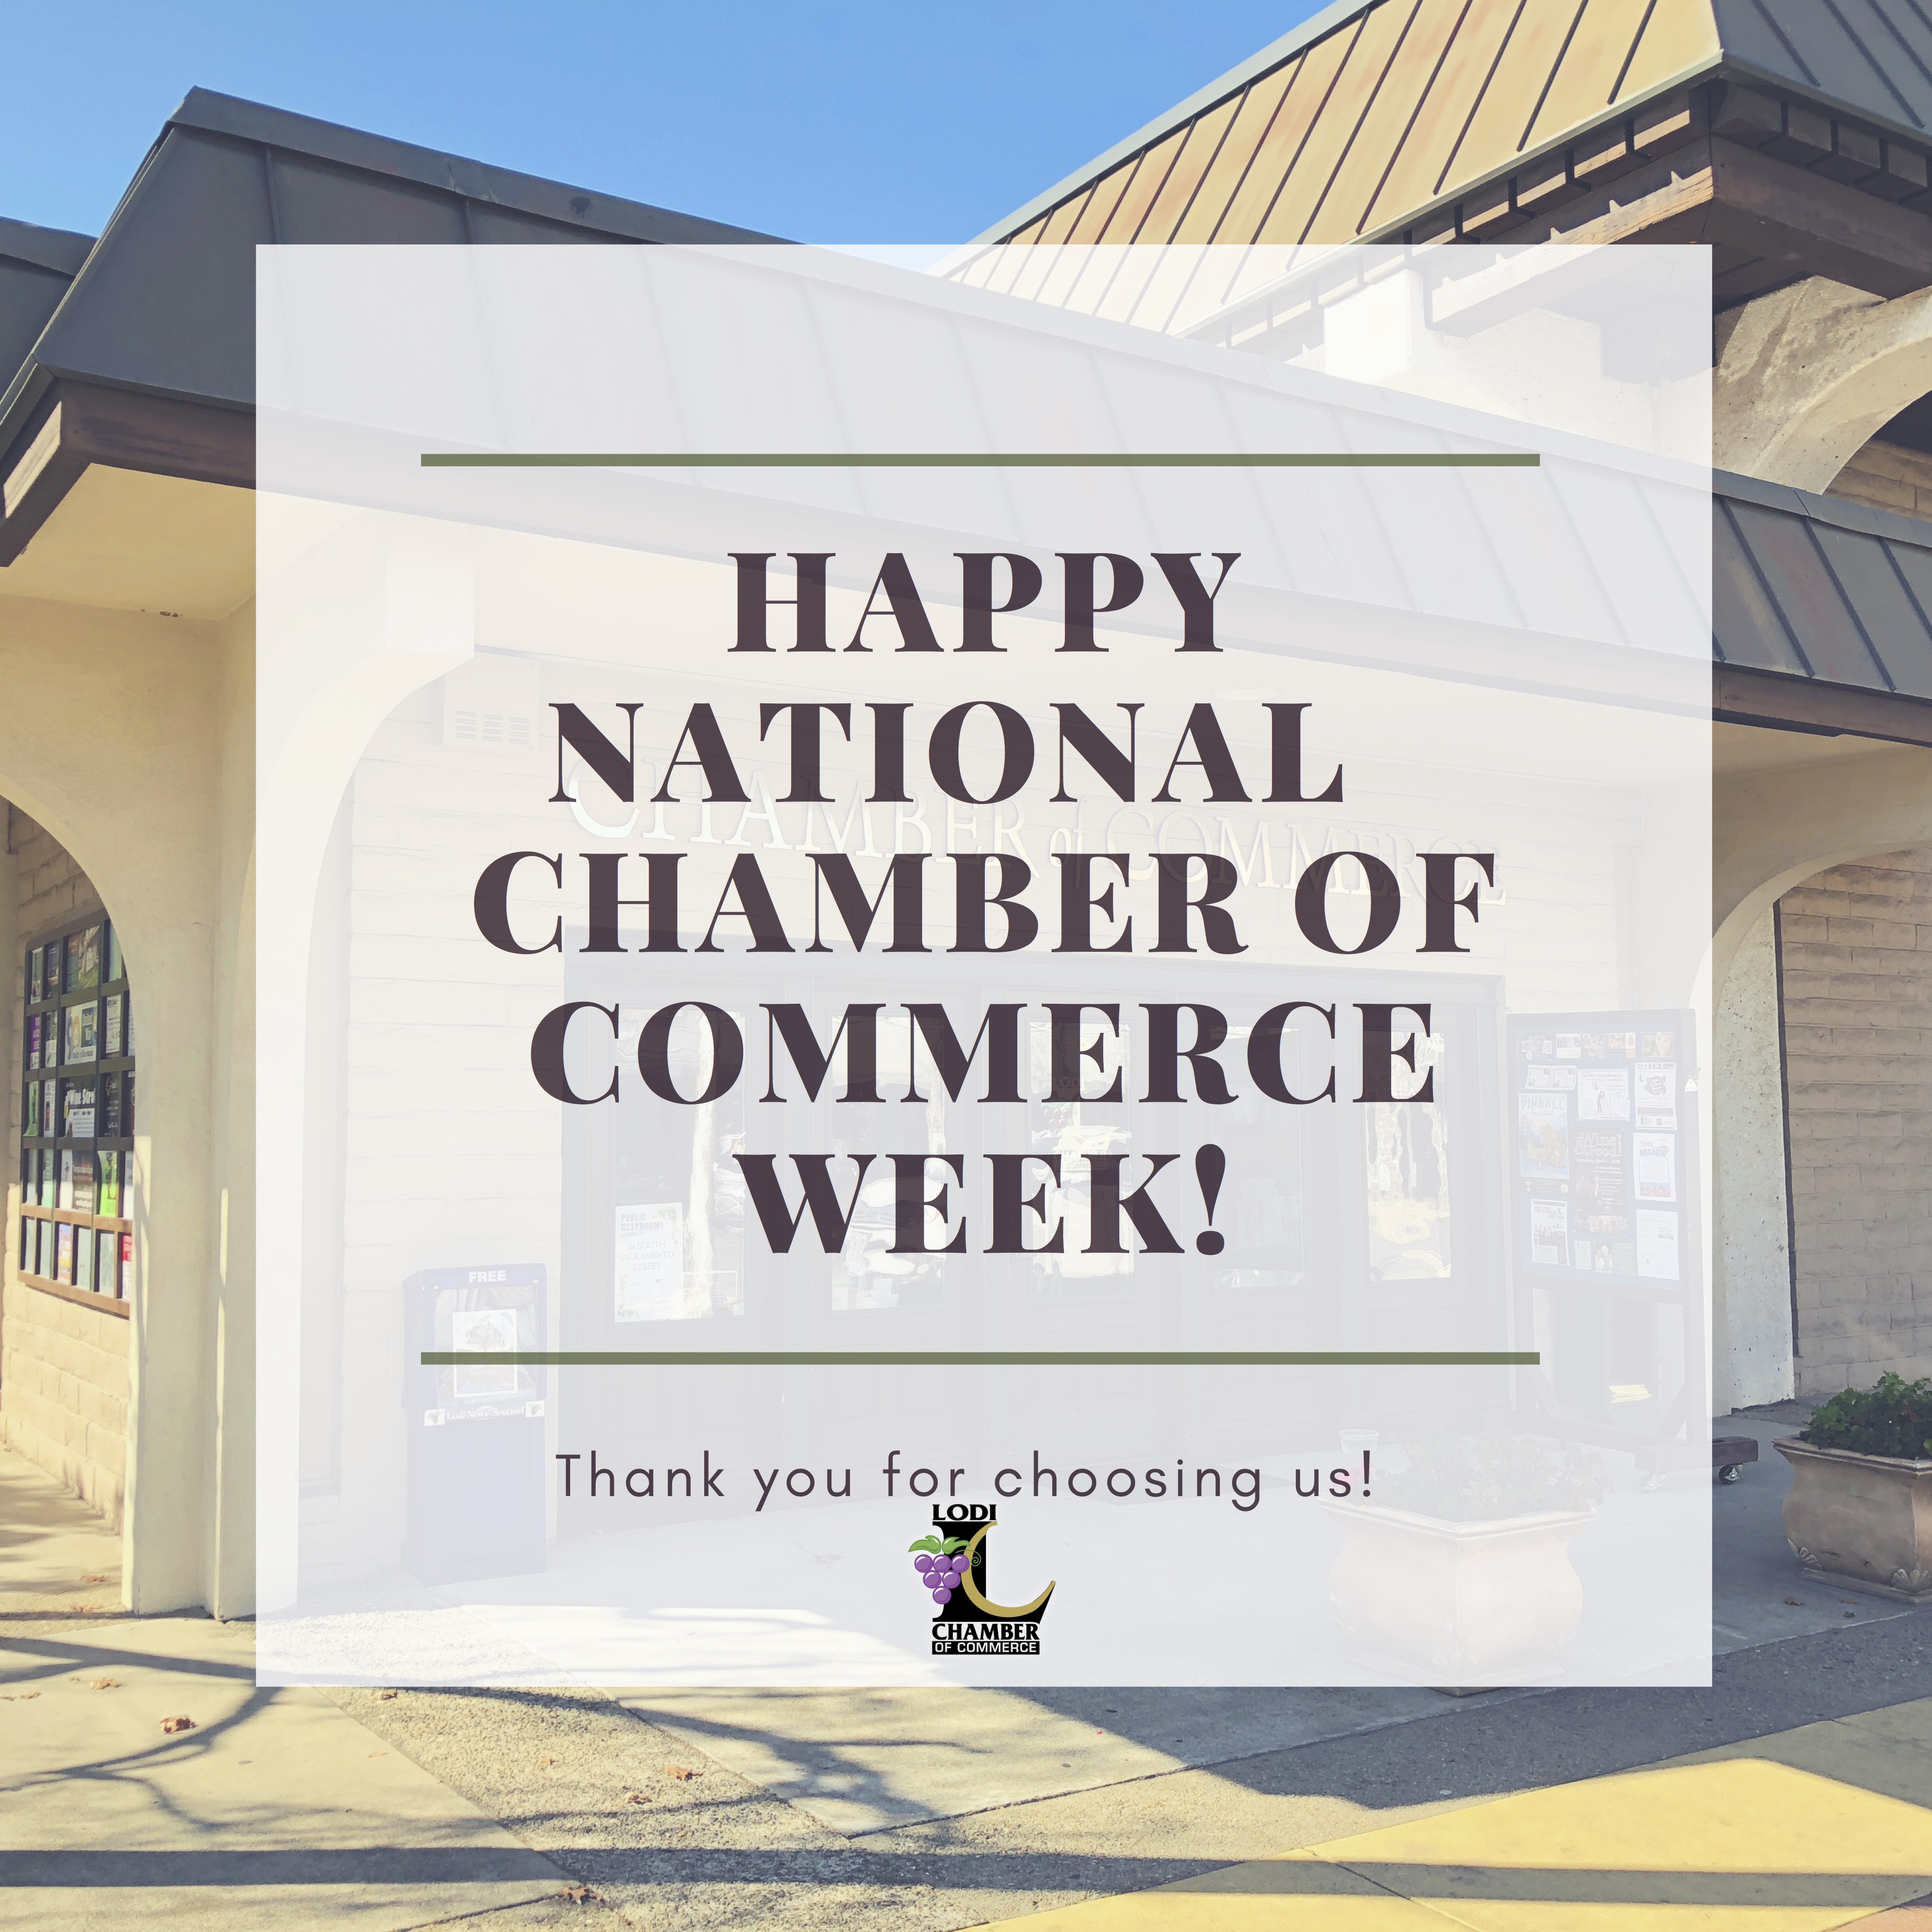 Celebrating National Chamber of Commerce Week